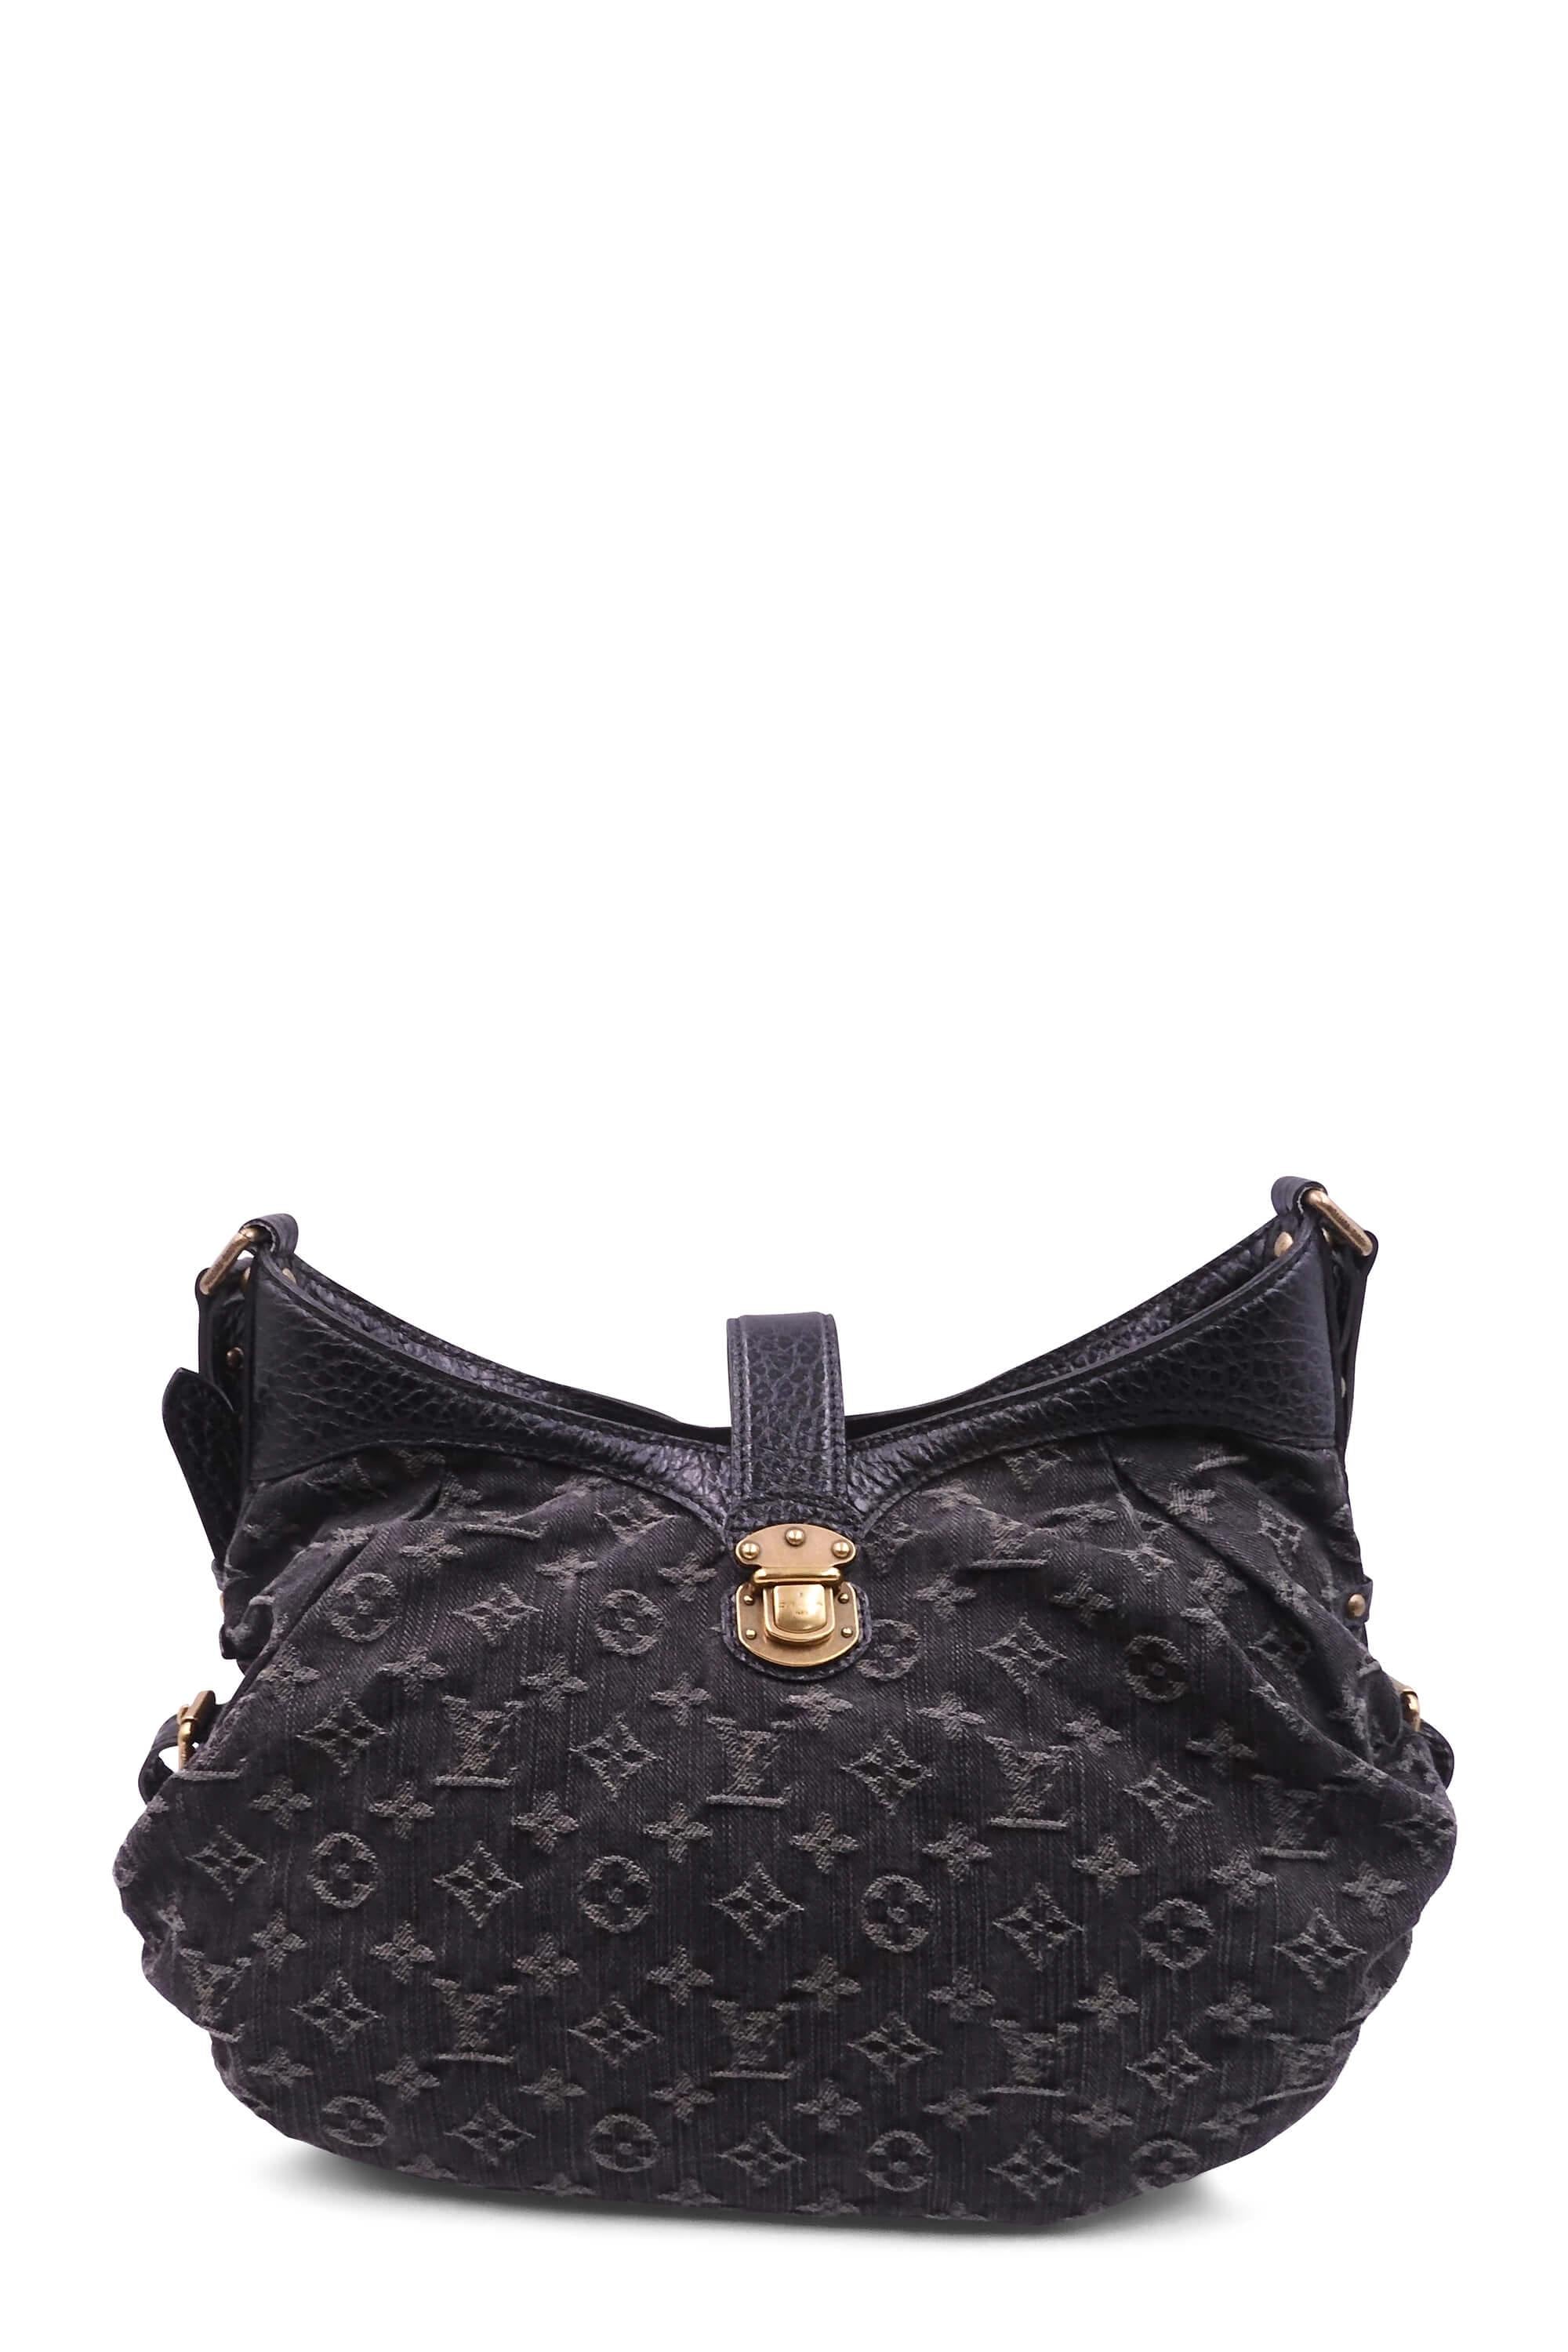 Louis Vuitton Black Mahina Denim Bag  eBay